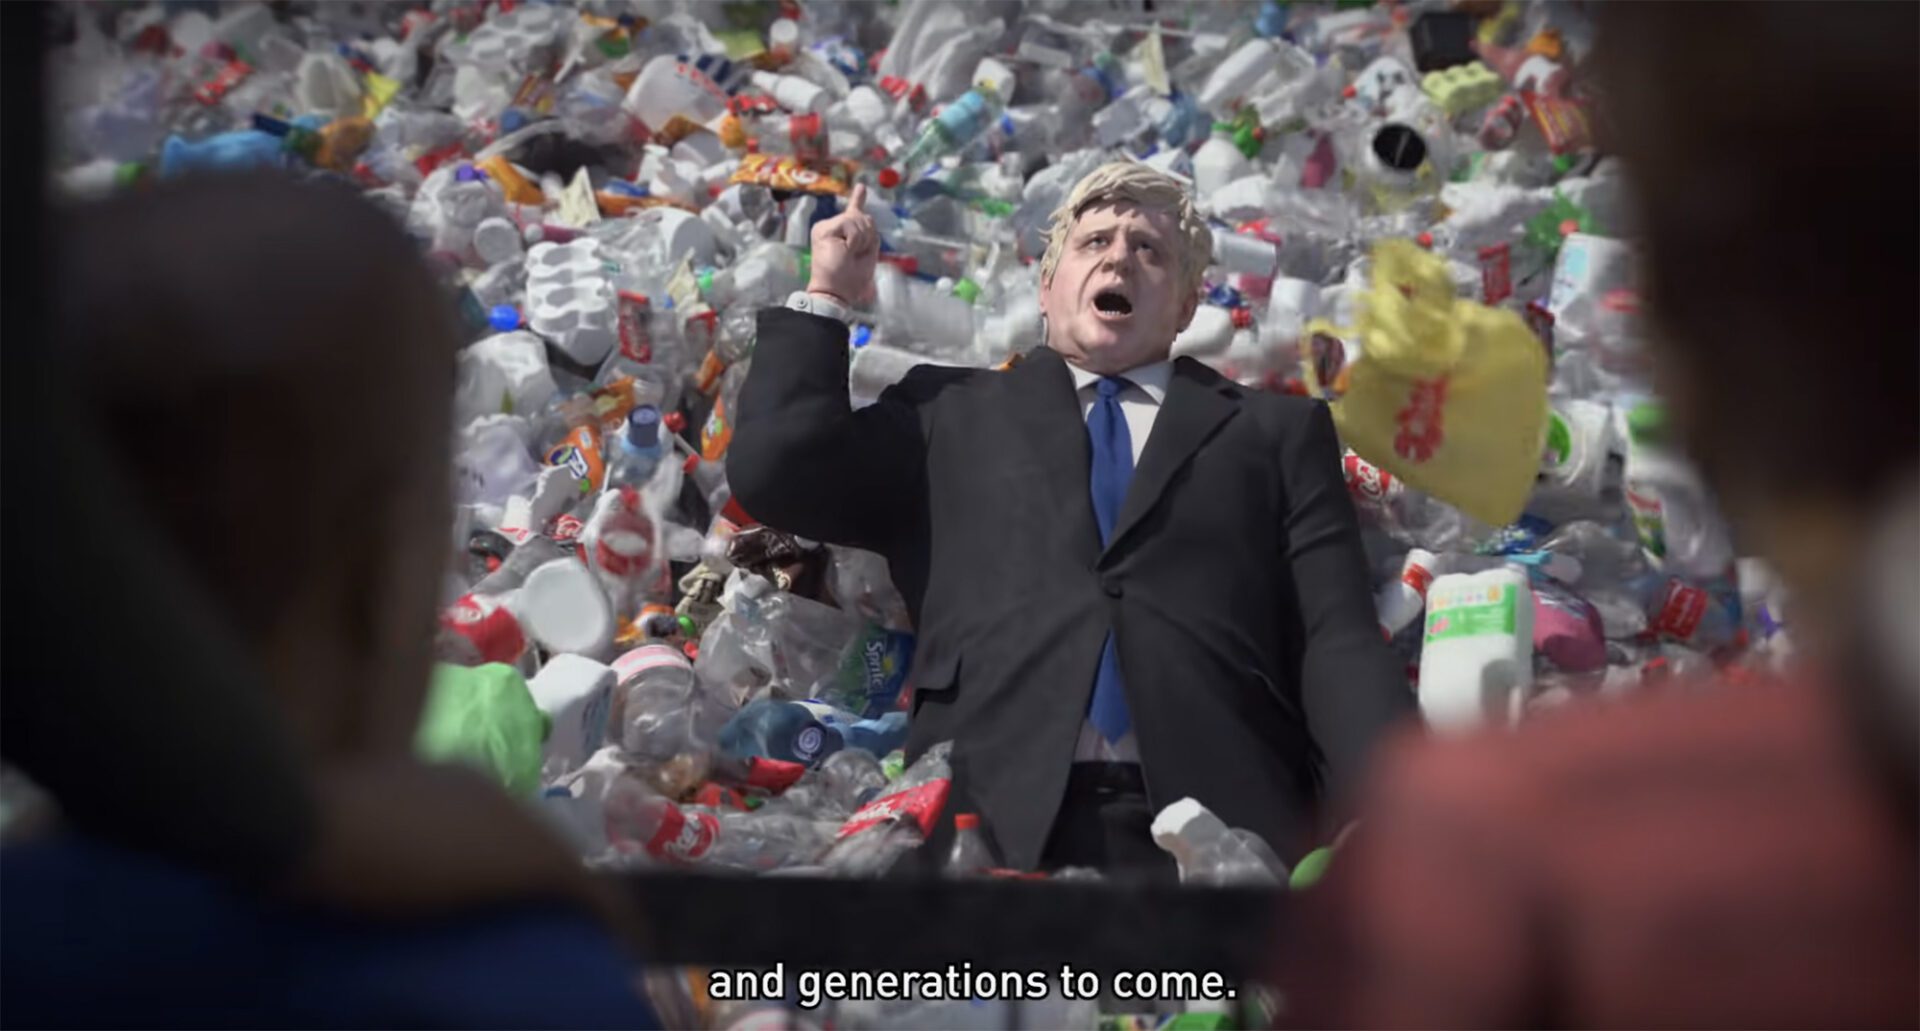 Wasteminster, campanha da Greenpeace com Boris Johnson